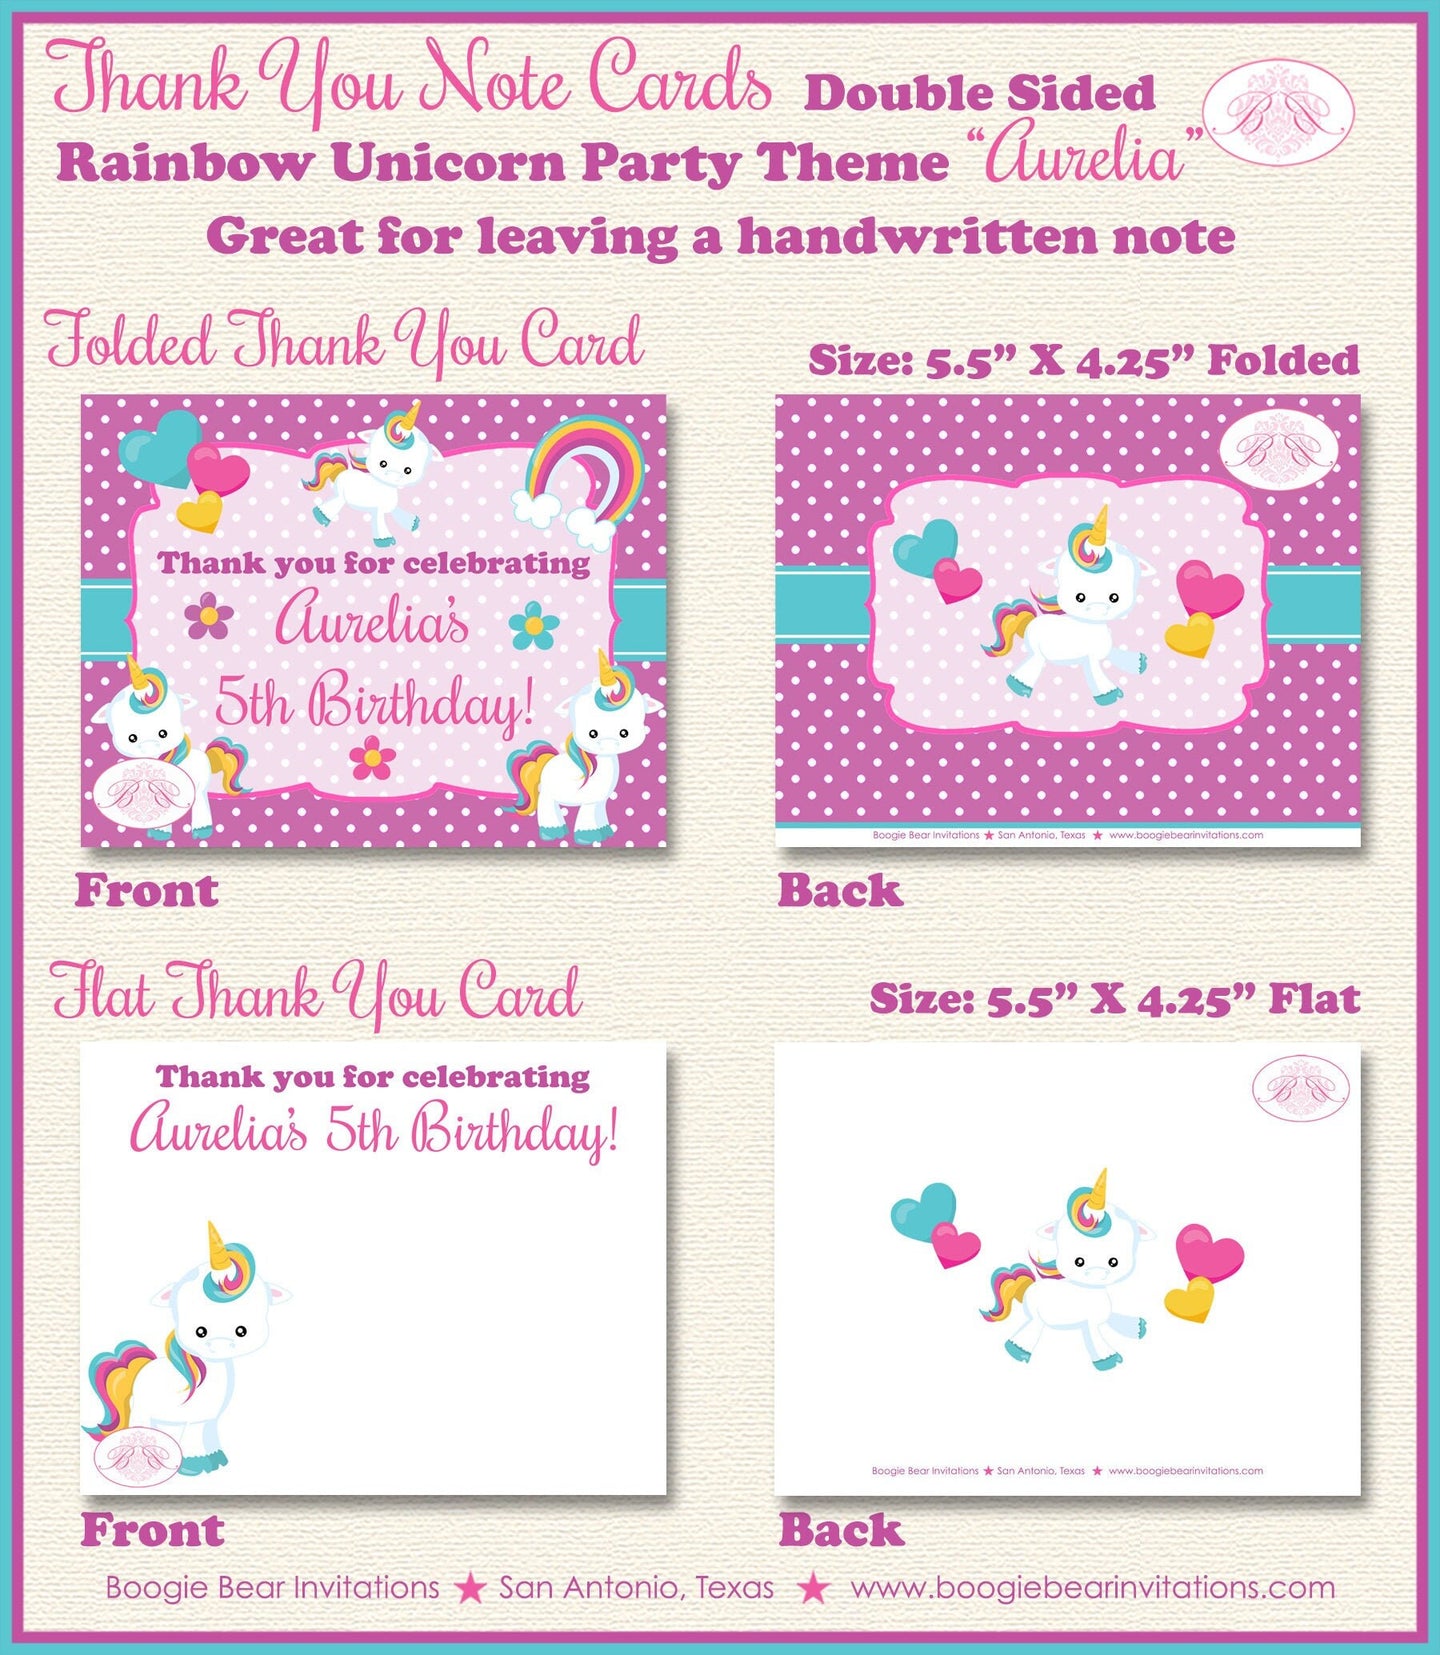 Rainbow Unicorn Party Thank You Card Birthday Girl Pink Blue Purple Pony Horse Heart Flower Boogie Bear Invitations Aurelia Theme Printed